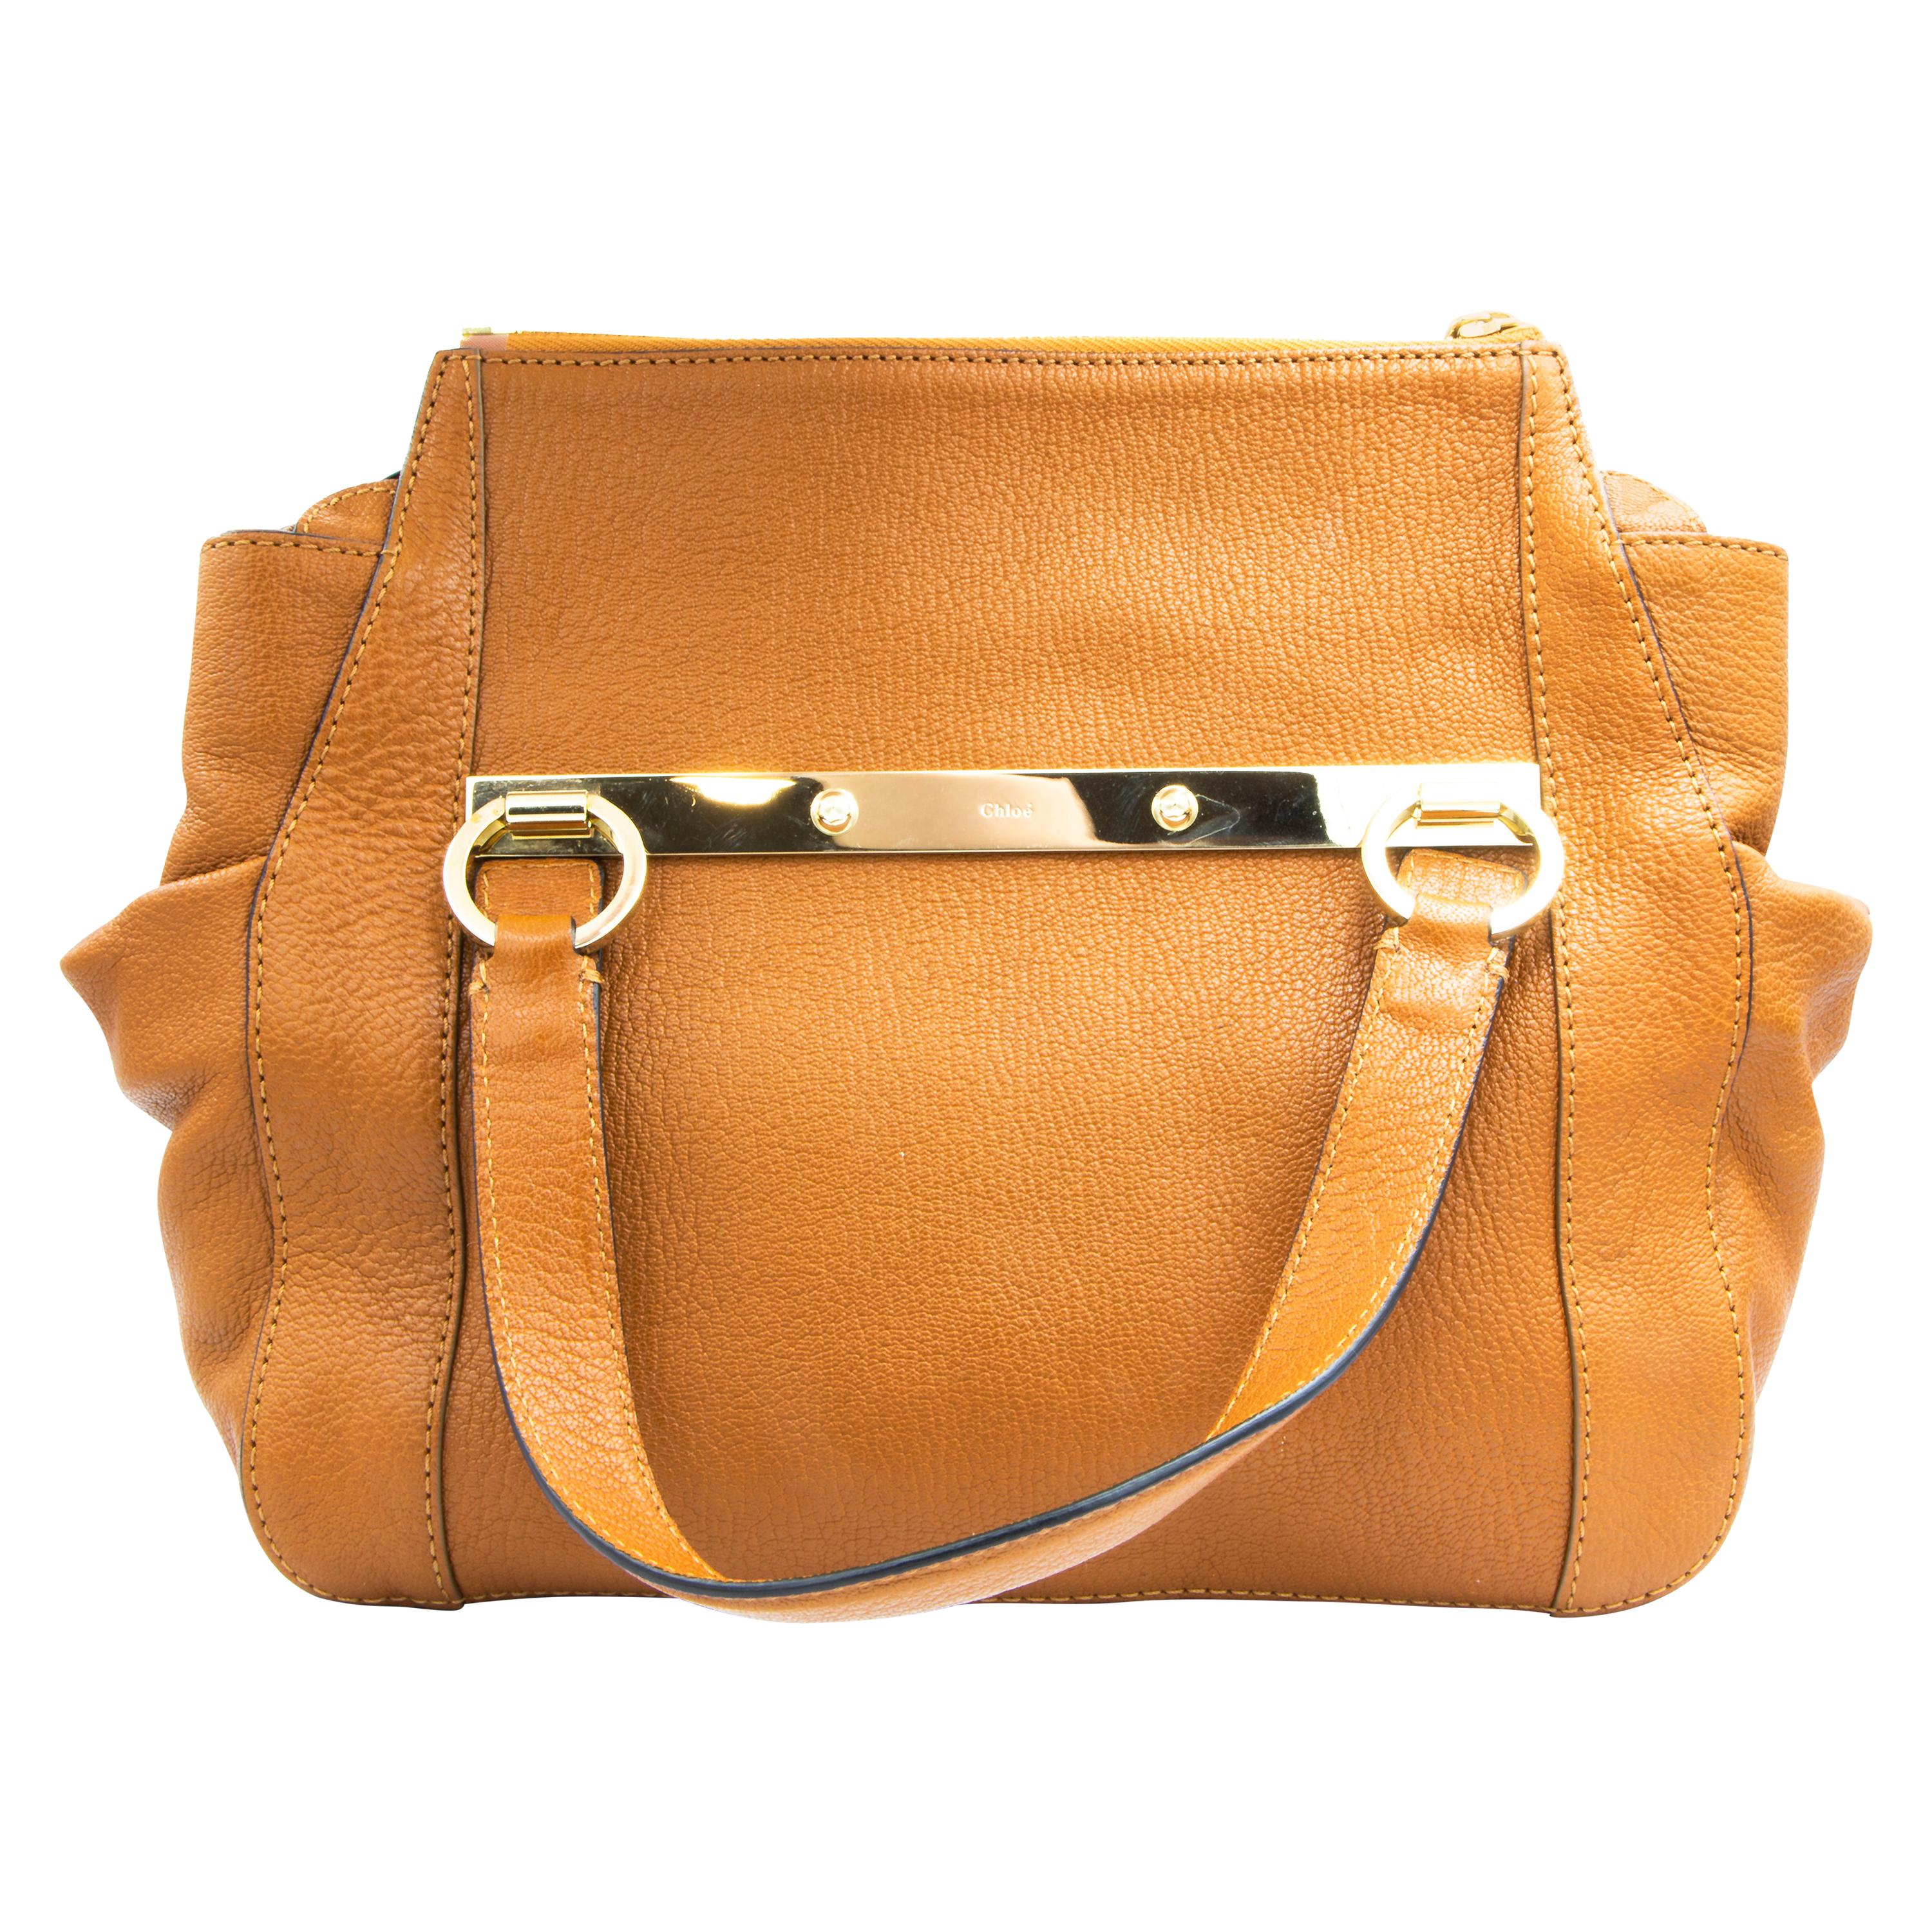 Authentic Chloe Brown Goatskin Handbag with Crossbody Strap For Sale